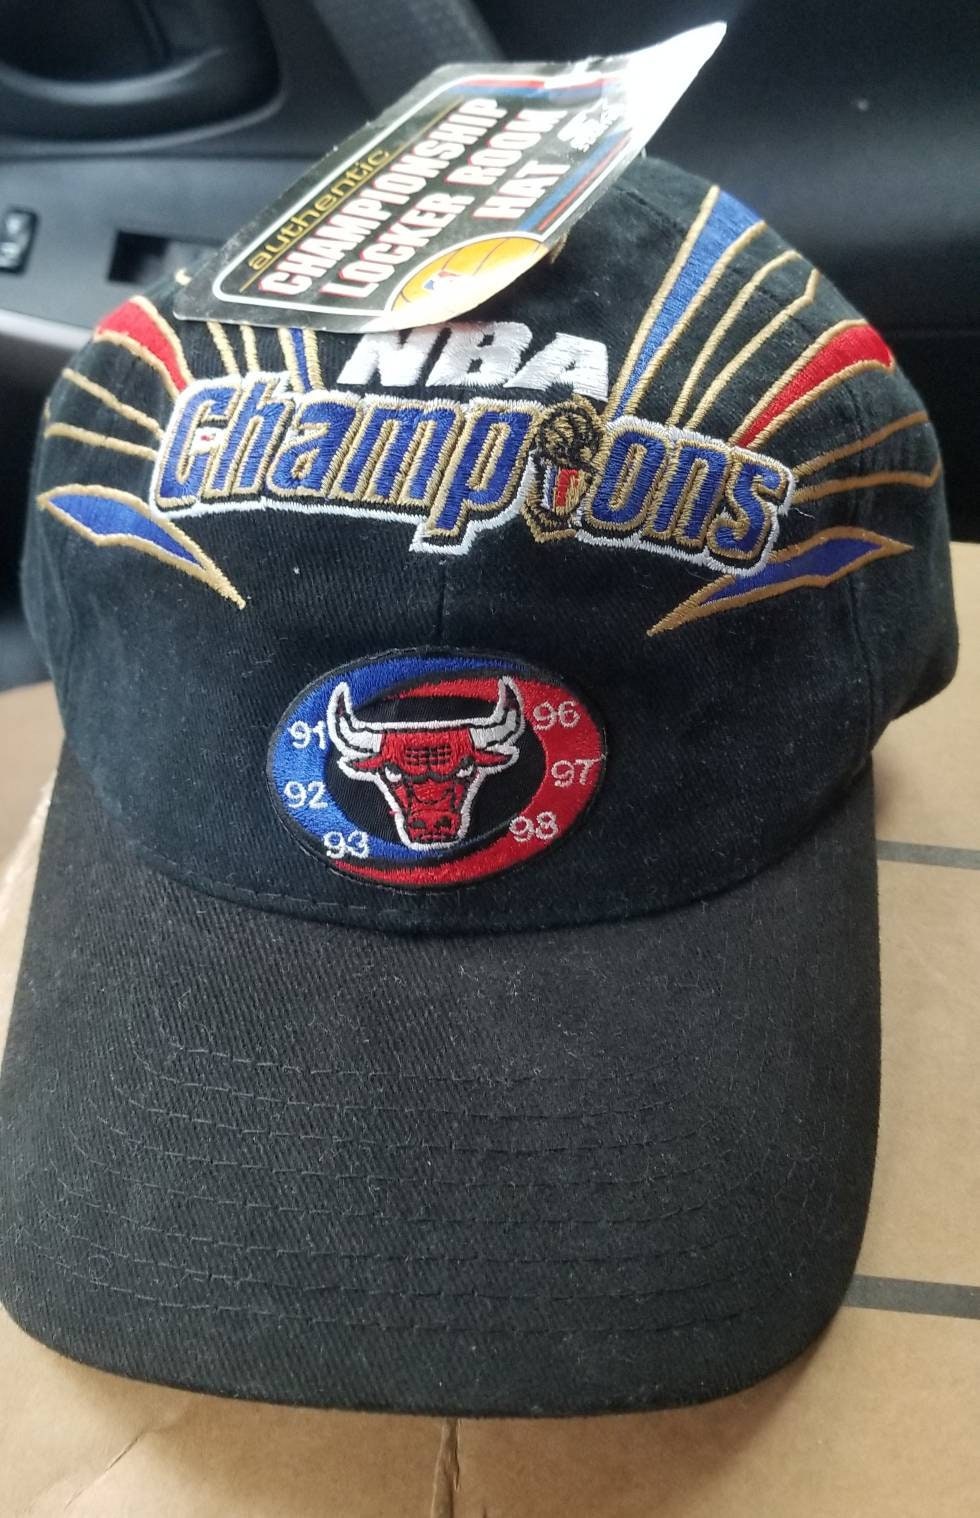 Vintage 1998 Chicago Bulls Starter Hat - New Old Stock Championship Locker Room Cap - 1990s NBA Athletic Team Collectors Memorabilia Nwt